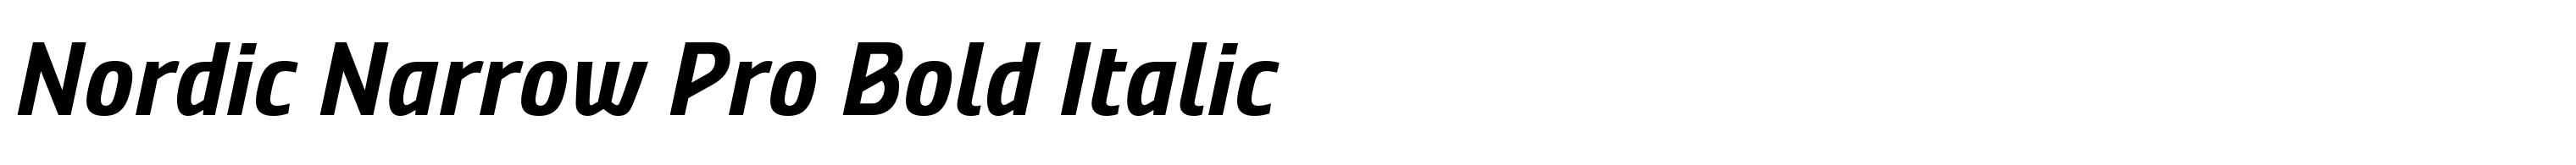 Nordic Narrow Pro Bold Italic